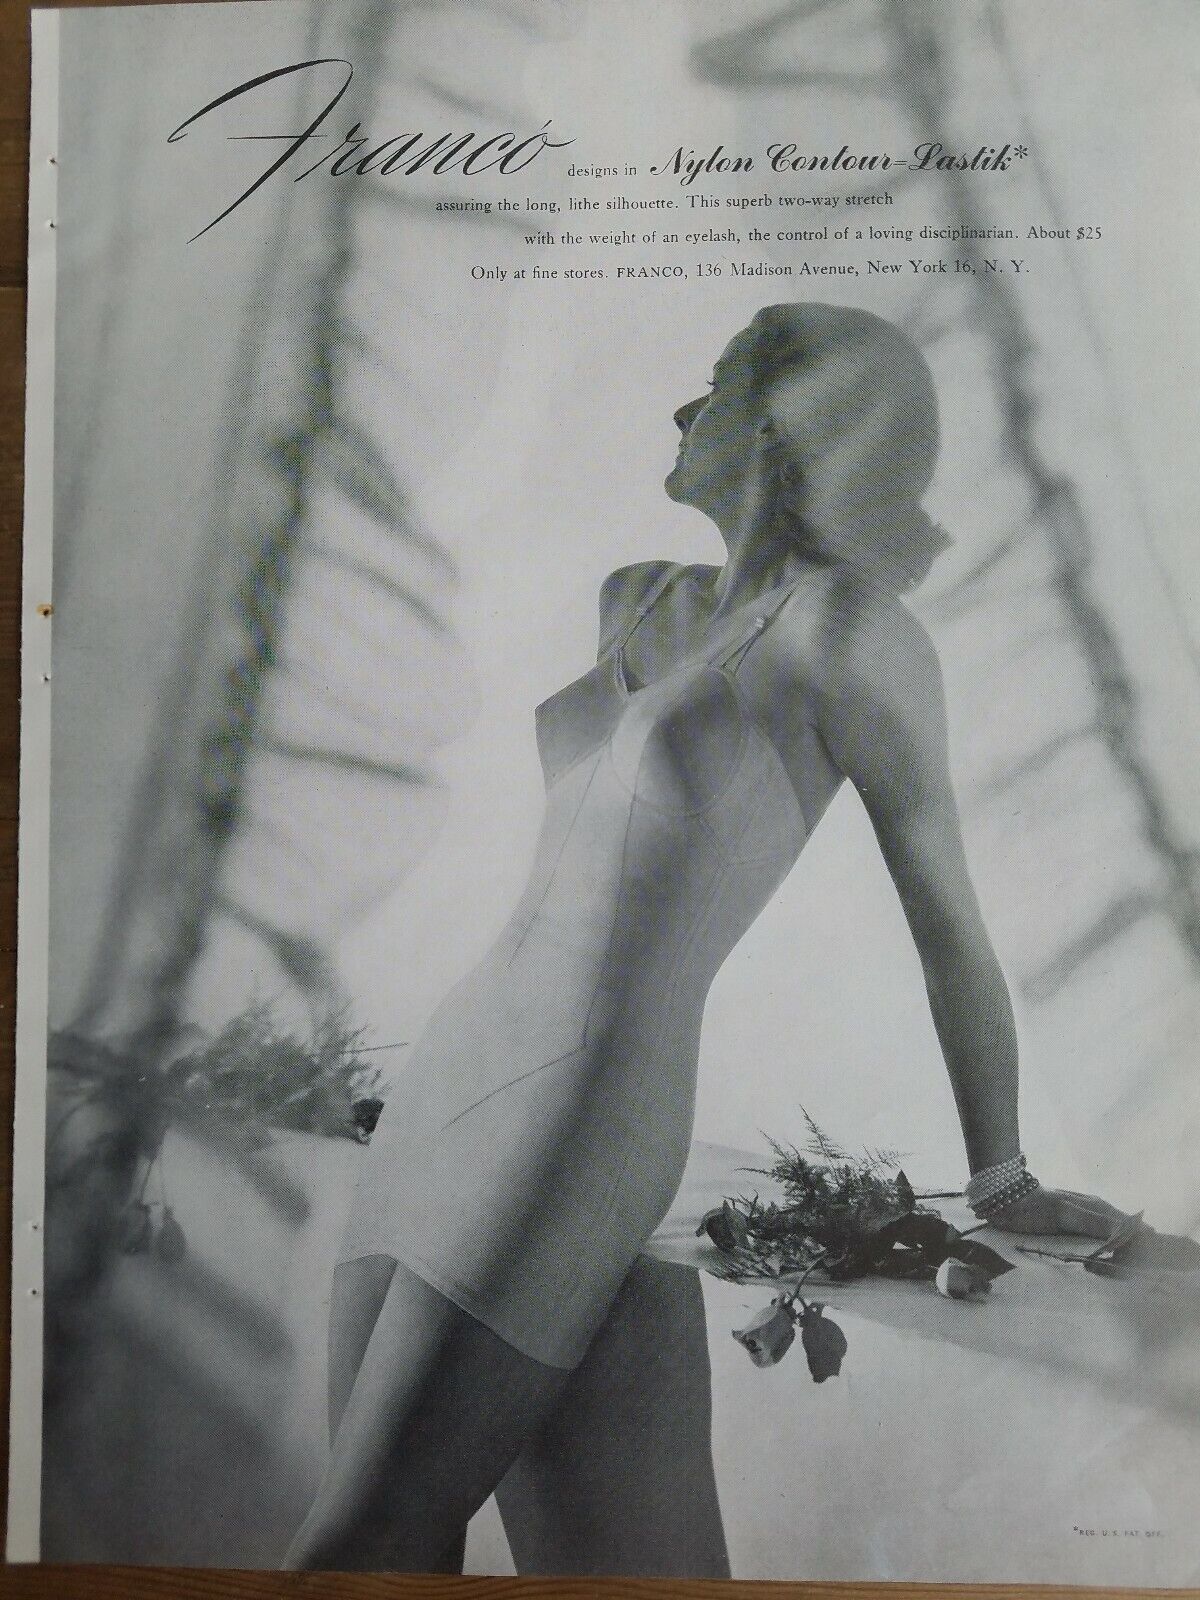 1948 womens Franco Nylon Contour Lastik 1 piece girdle garters bra fashion ad